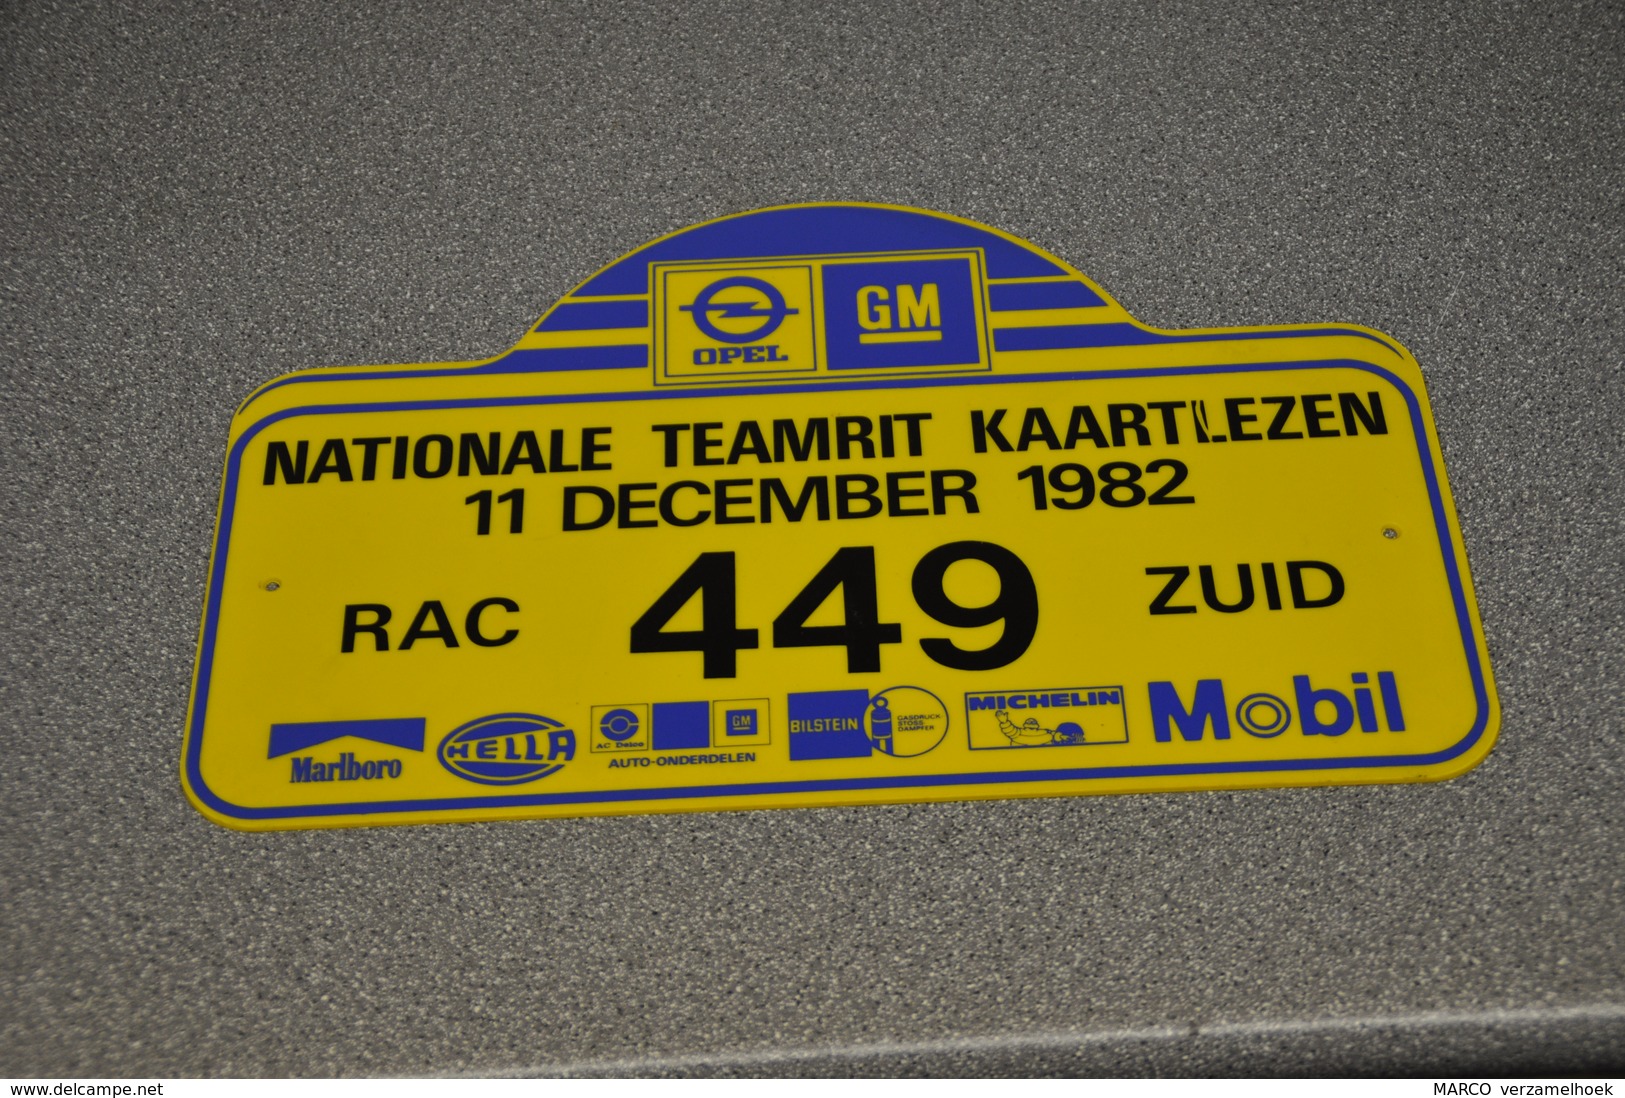 Rally Plaat-rallye Plaque Plastic: Nat. Teamrit 1982 RAC-zuid Opel-GM-marlboro-hella-michelin-mobil - Plaques De Rallye